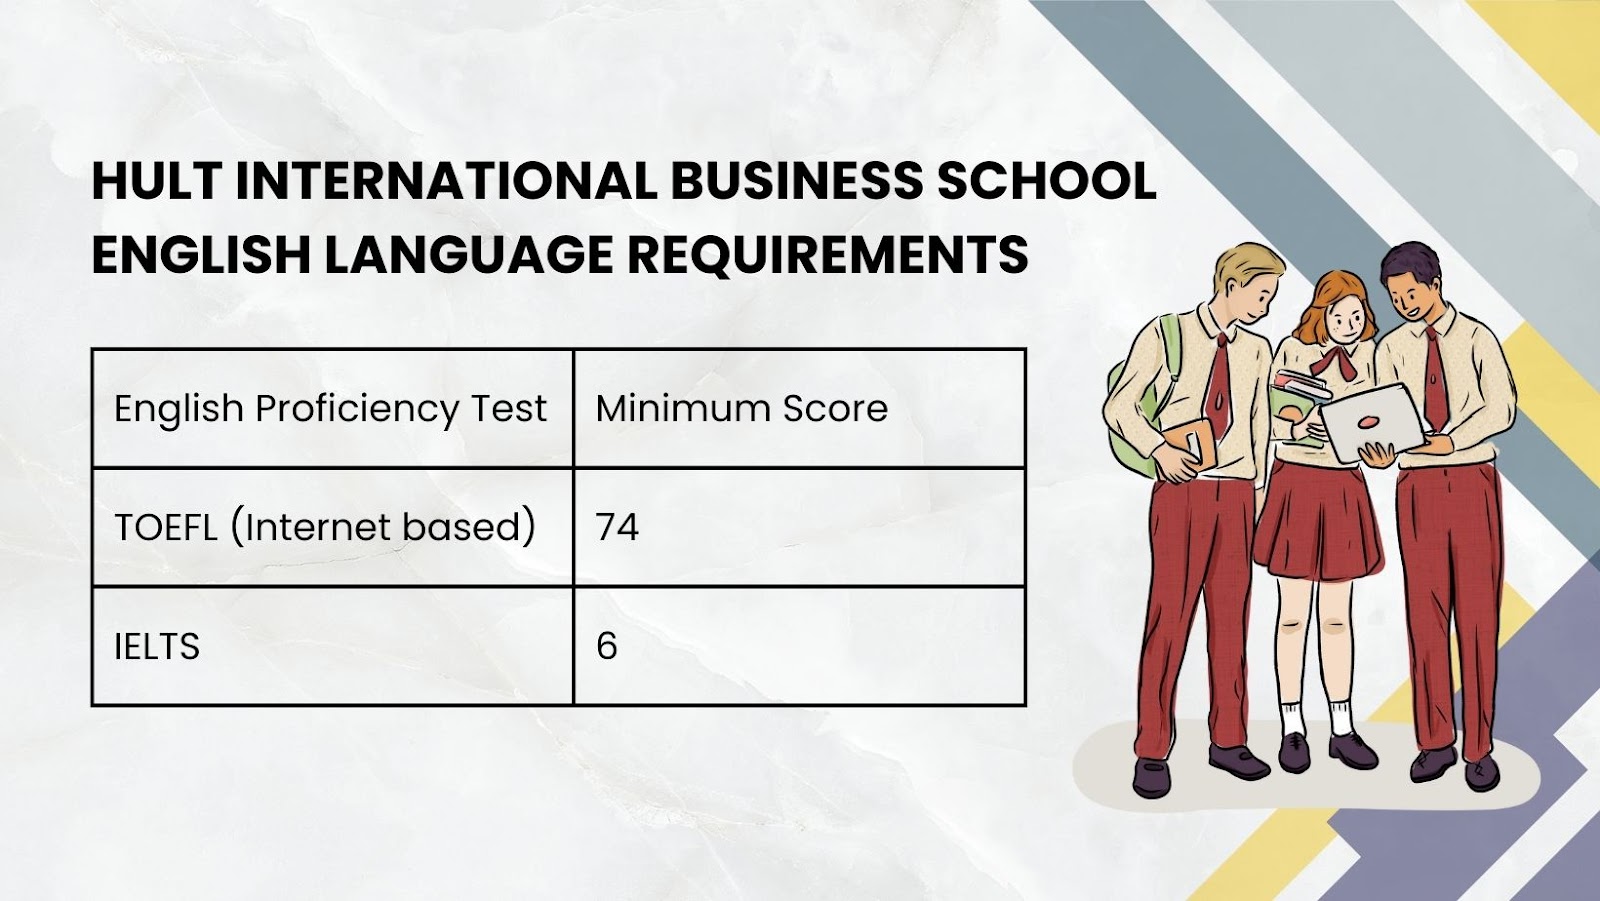 Hult International Business School English Language Requirements.